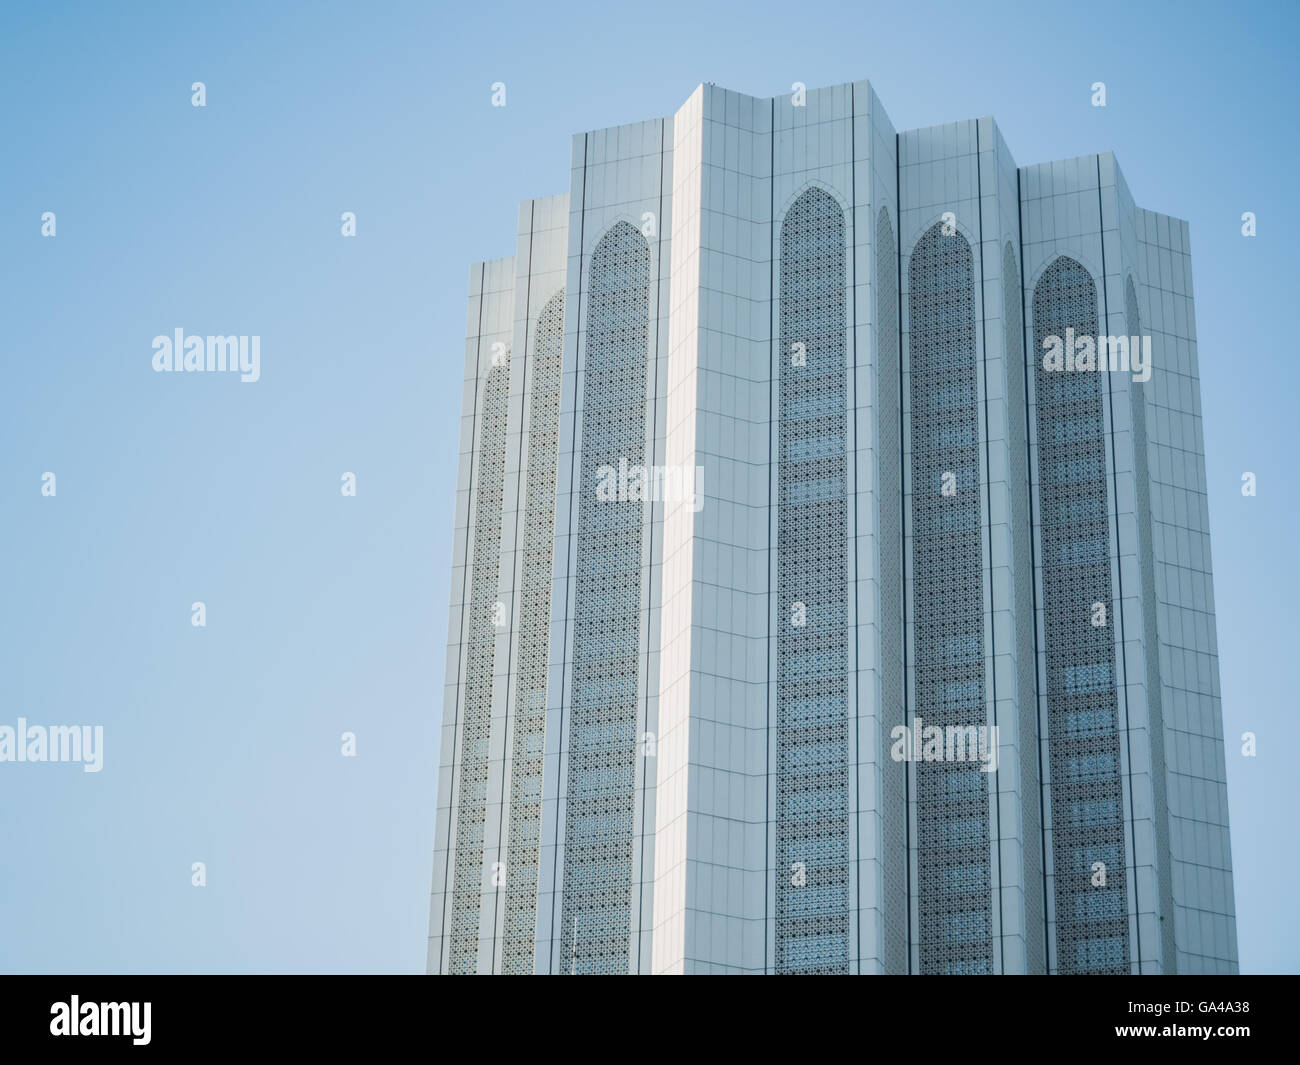 KUALA LUMPUR, MALAYSIA - MAR 1: Dayabumi Complex on March 1, 2016 in Kuala Lumpur, Malaysia. The facade of the tower is adorned Stock Photo